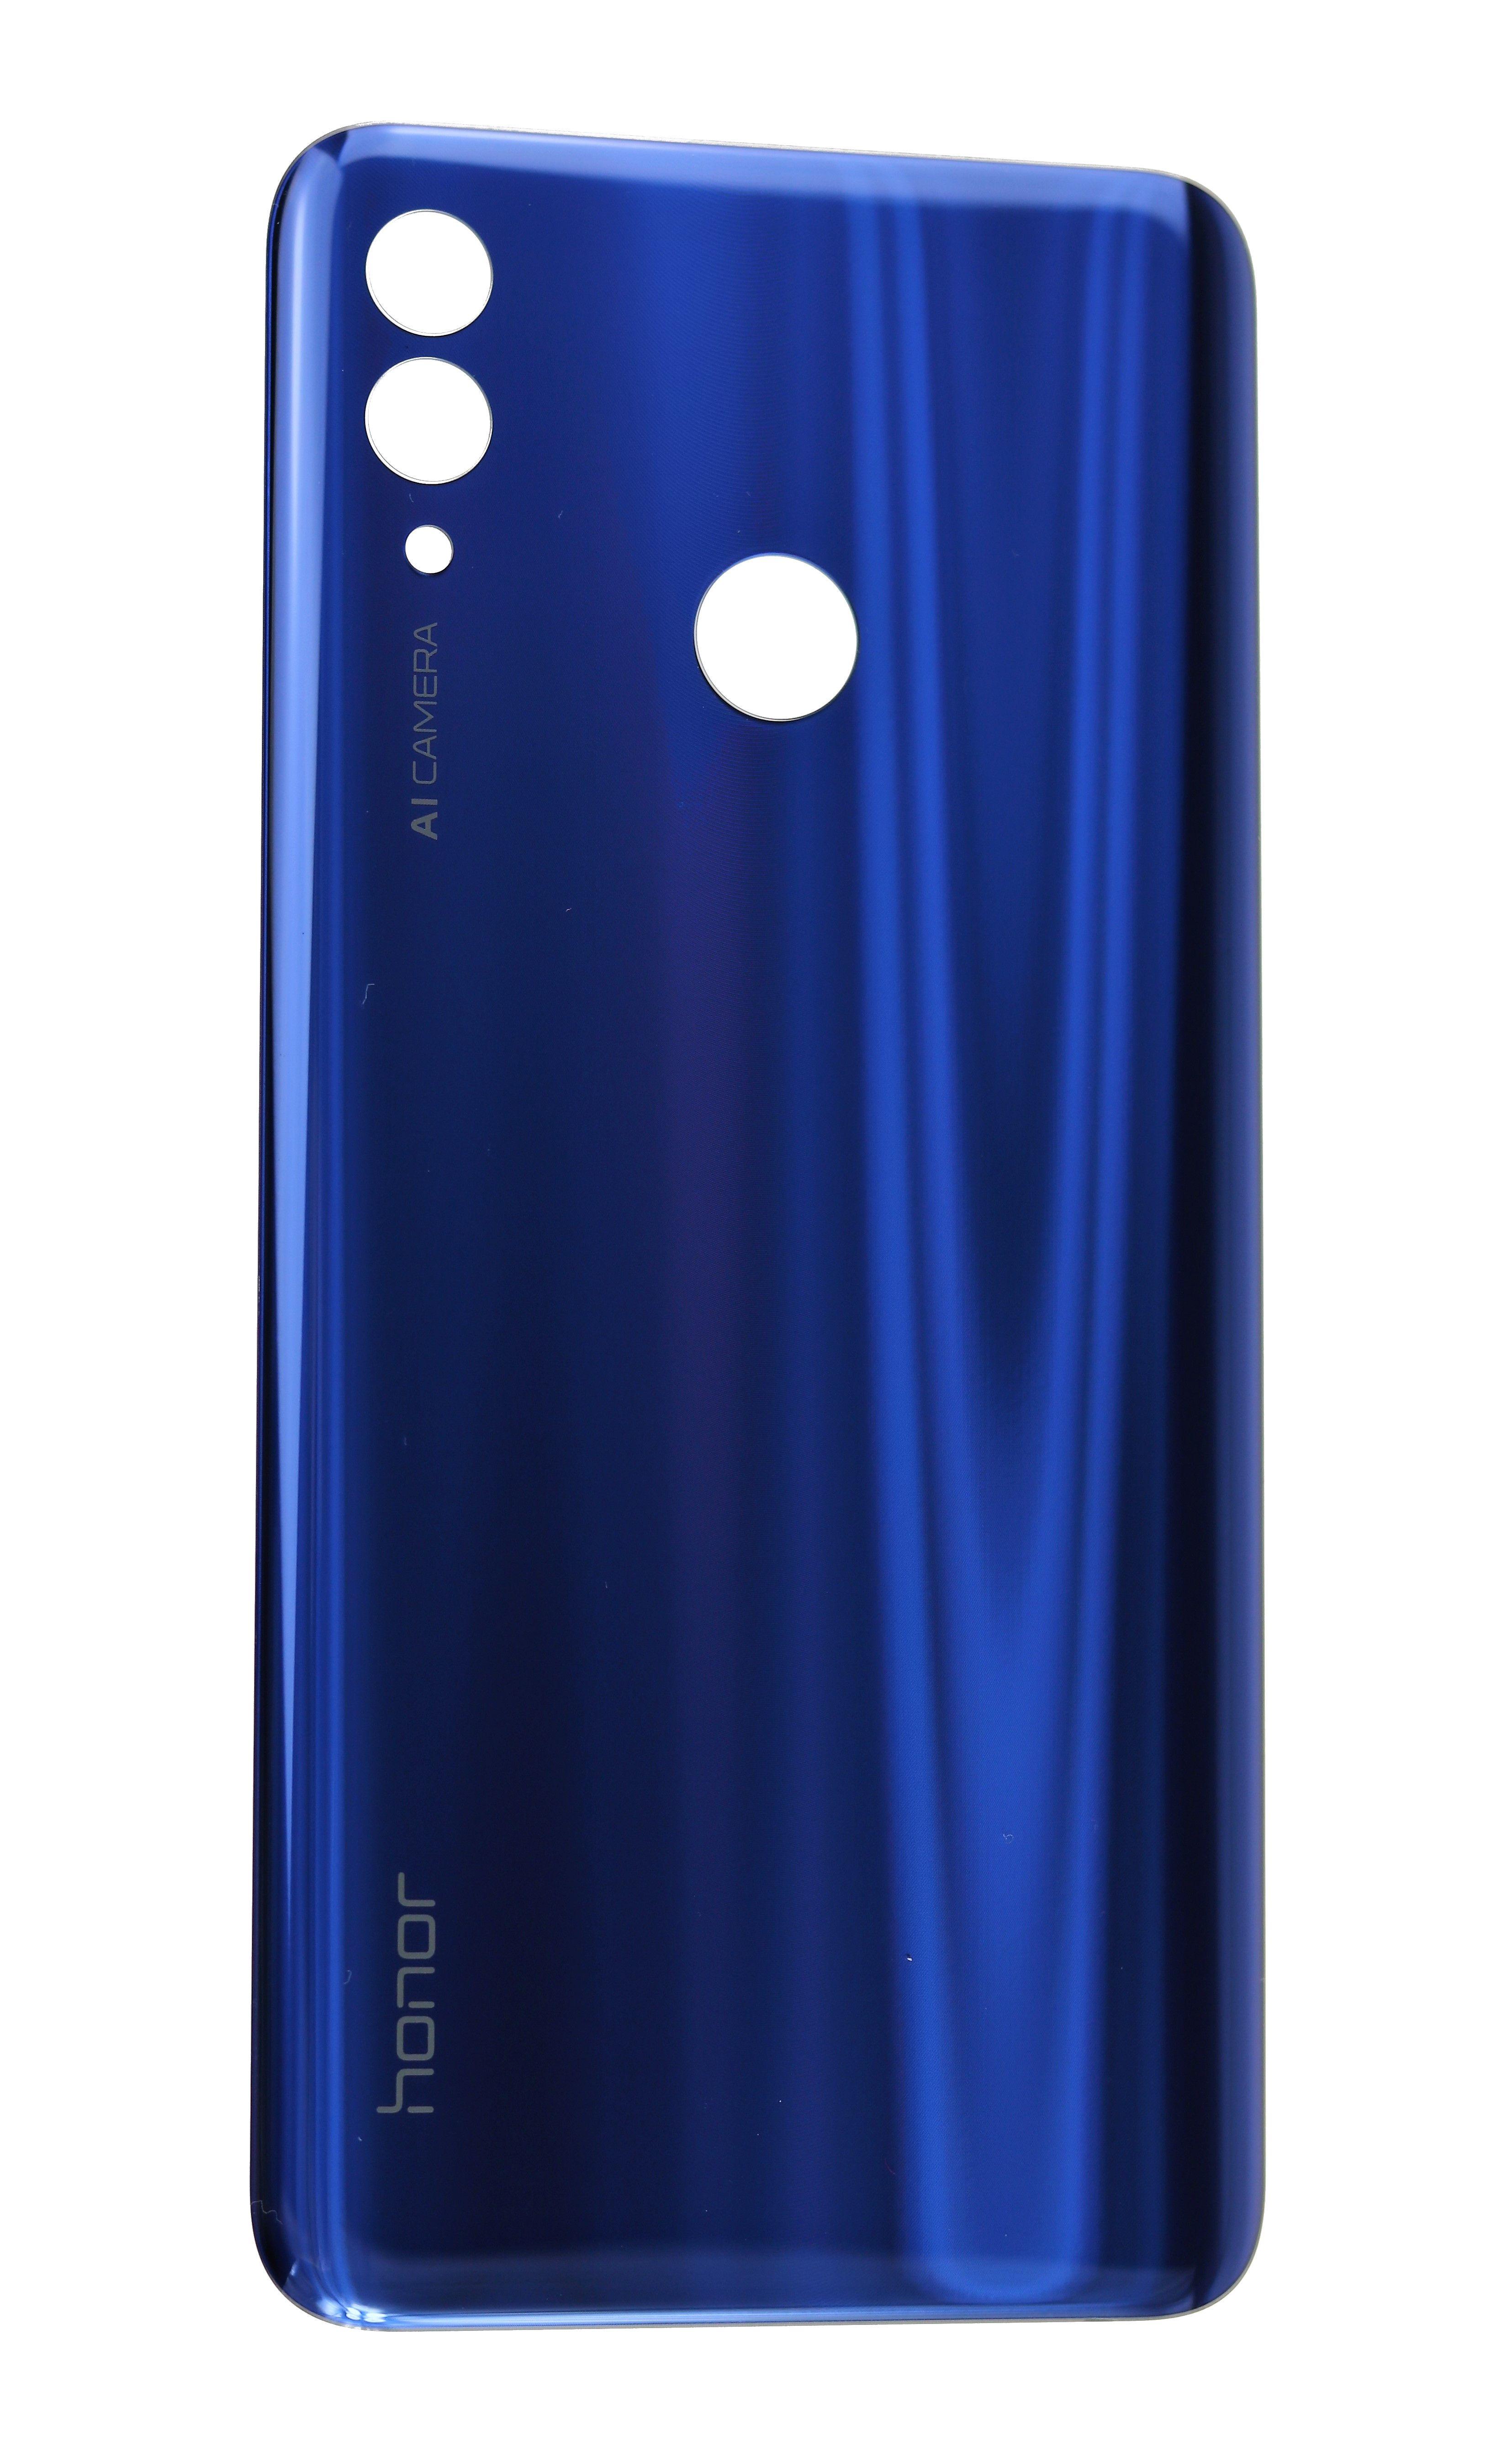 Originál kryt baterie Huawei honor 10 lite Sapphire Blue modrý demont